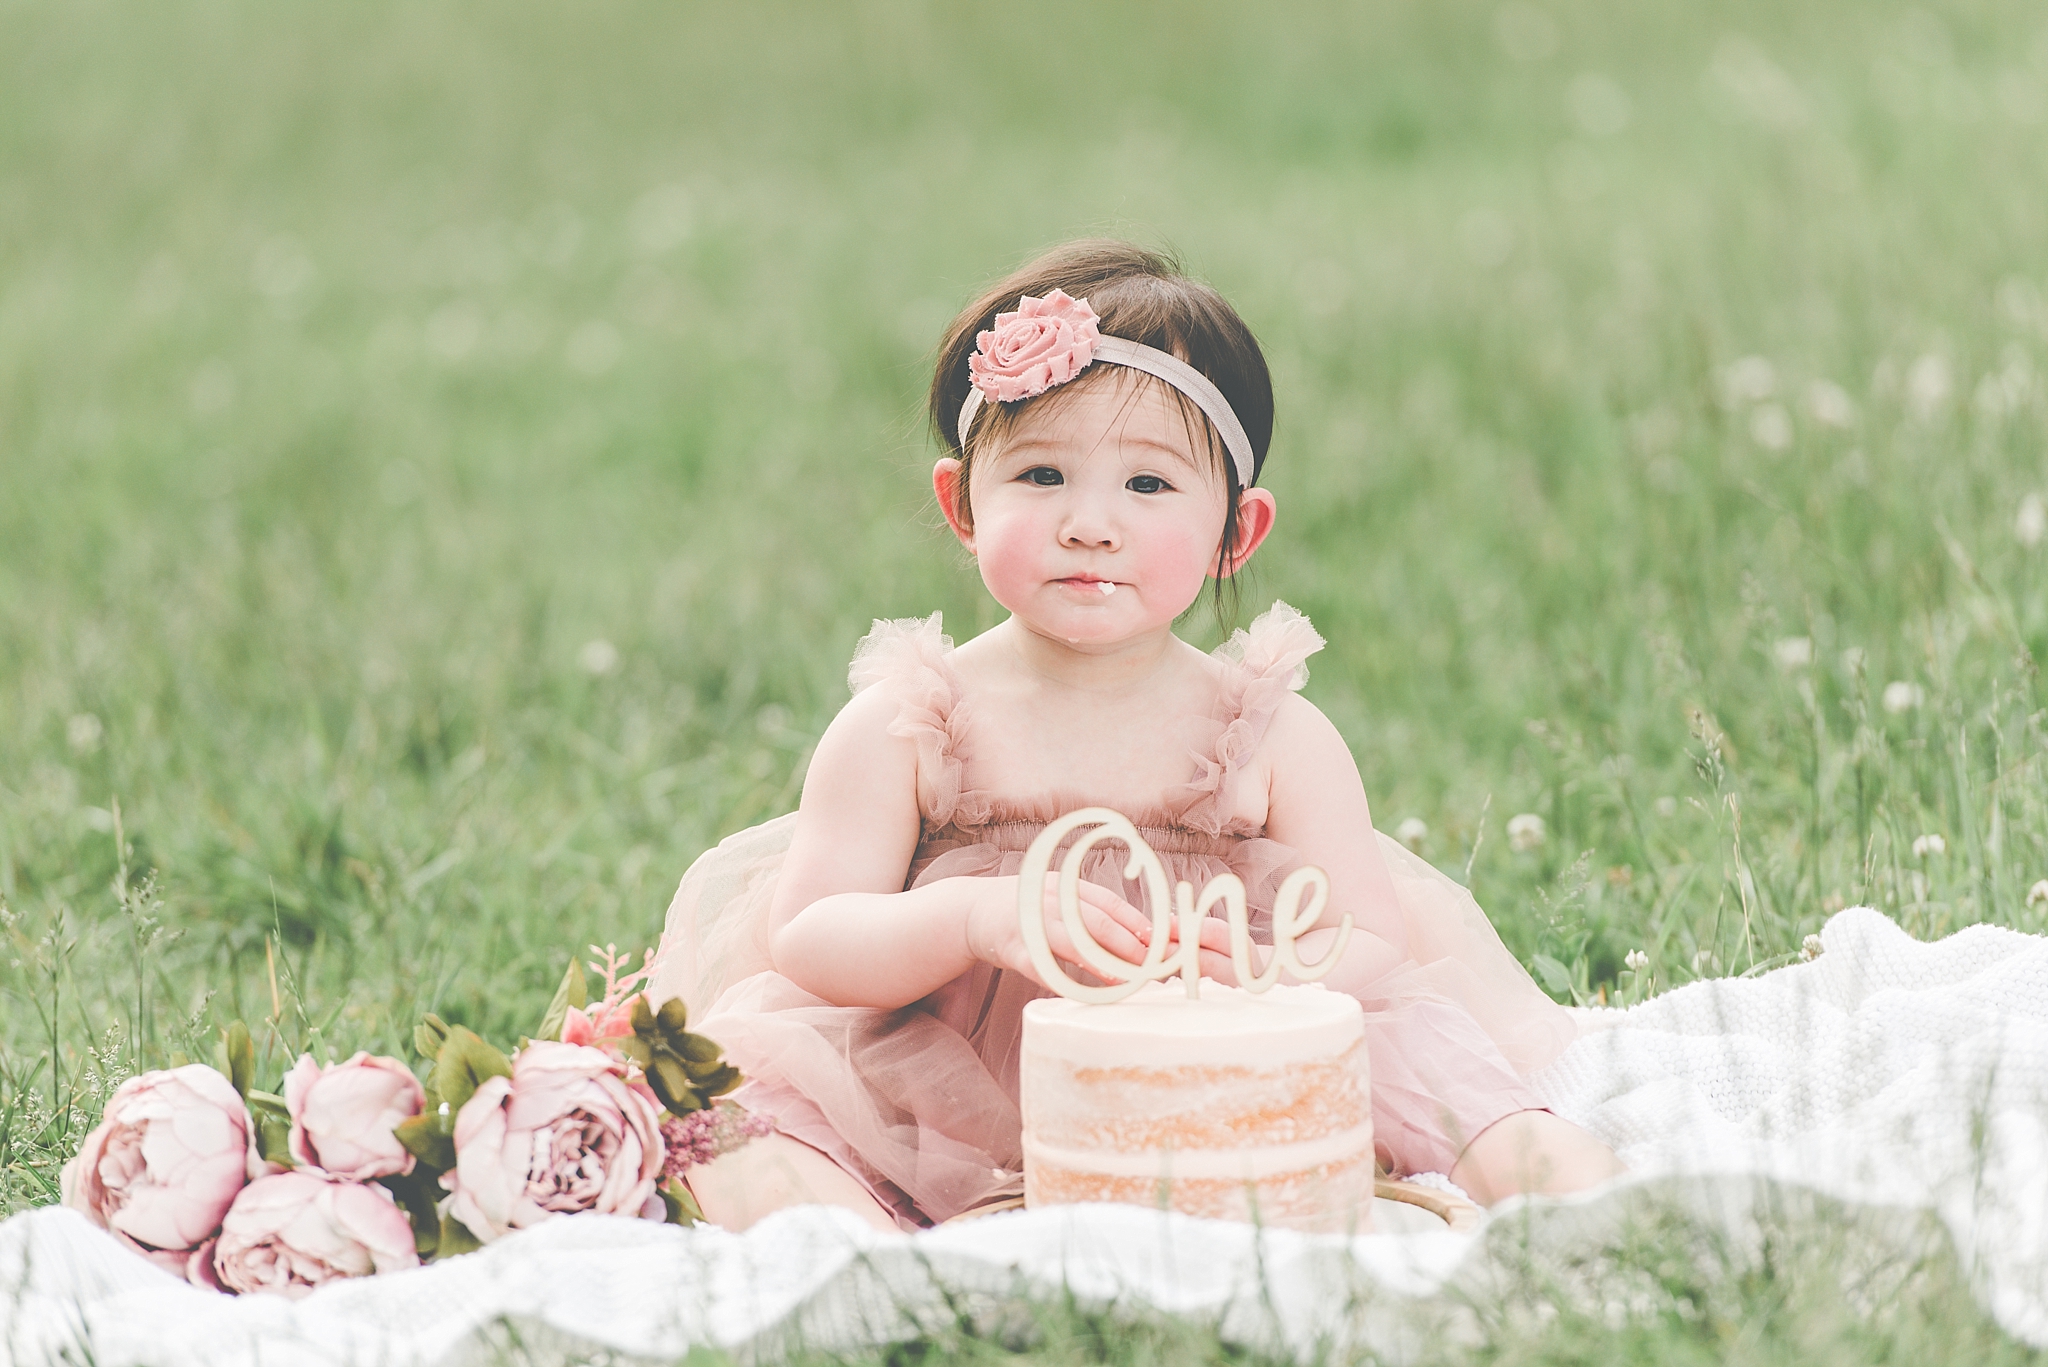 Kettering Ohio Baby Photographer | Emery’s Cake Smash